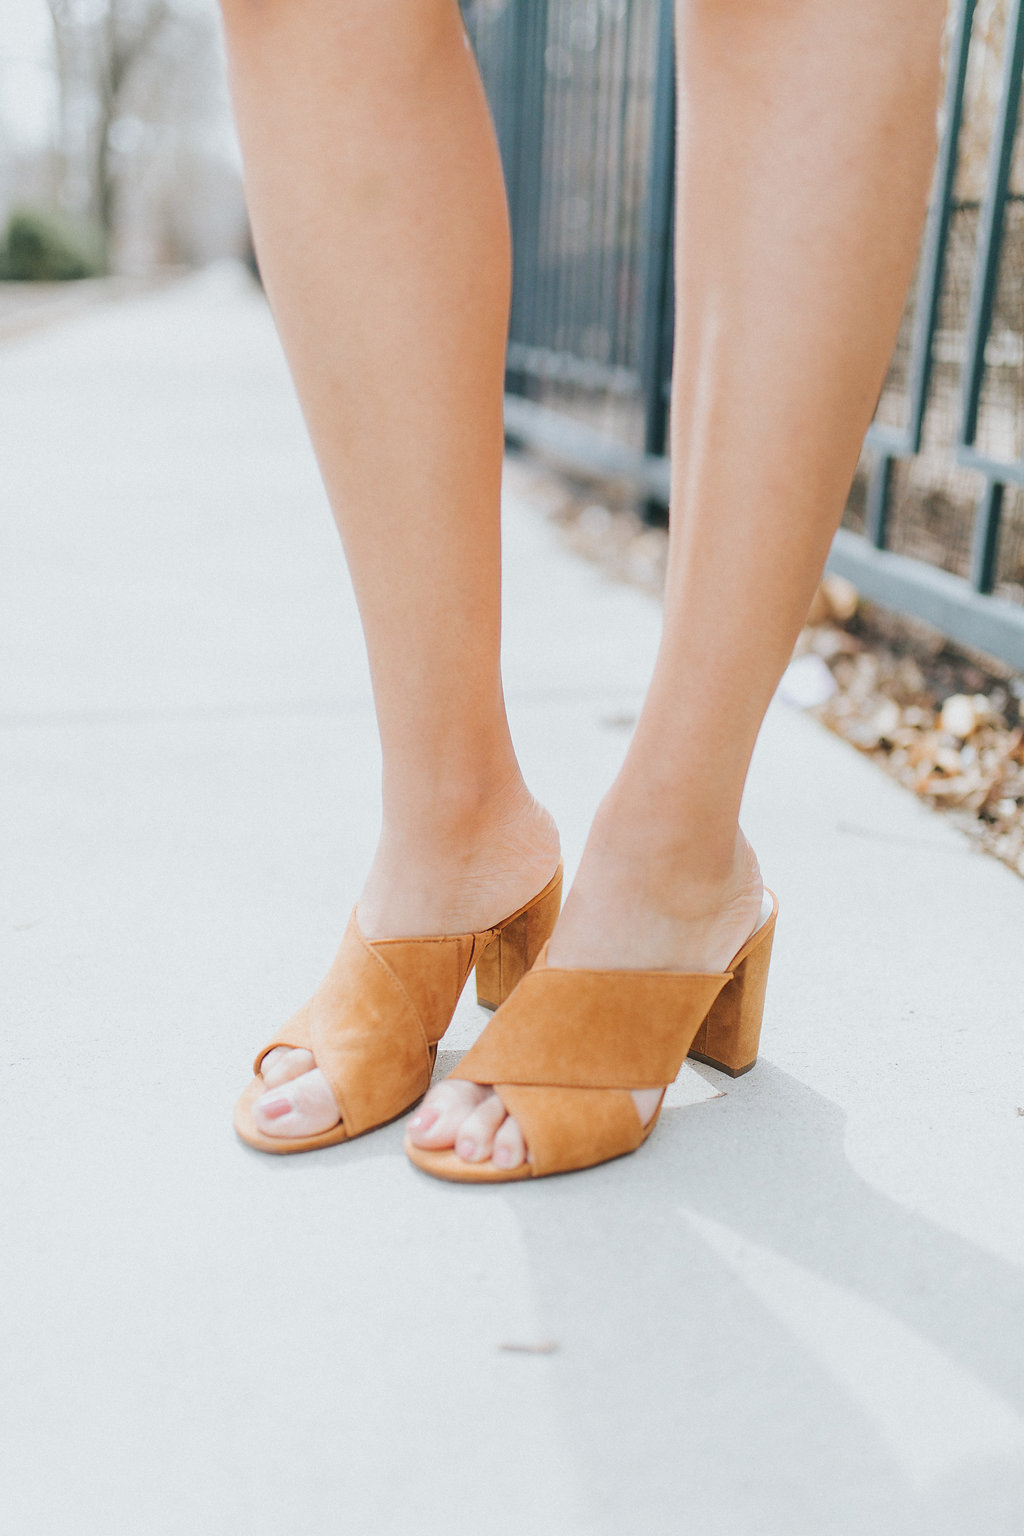 ann taylor brown heels